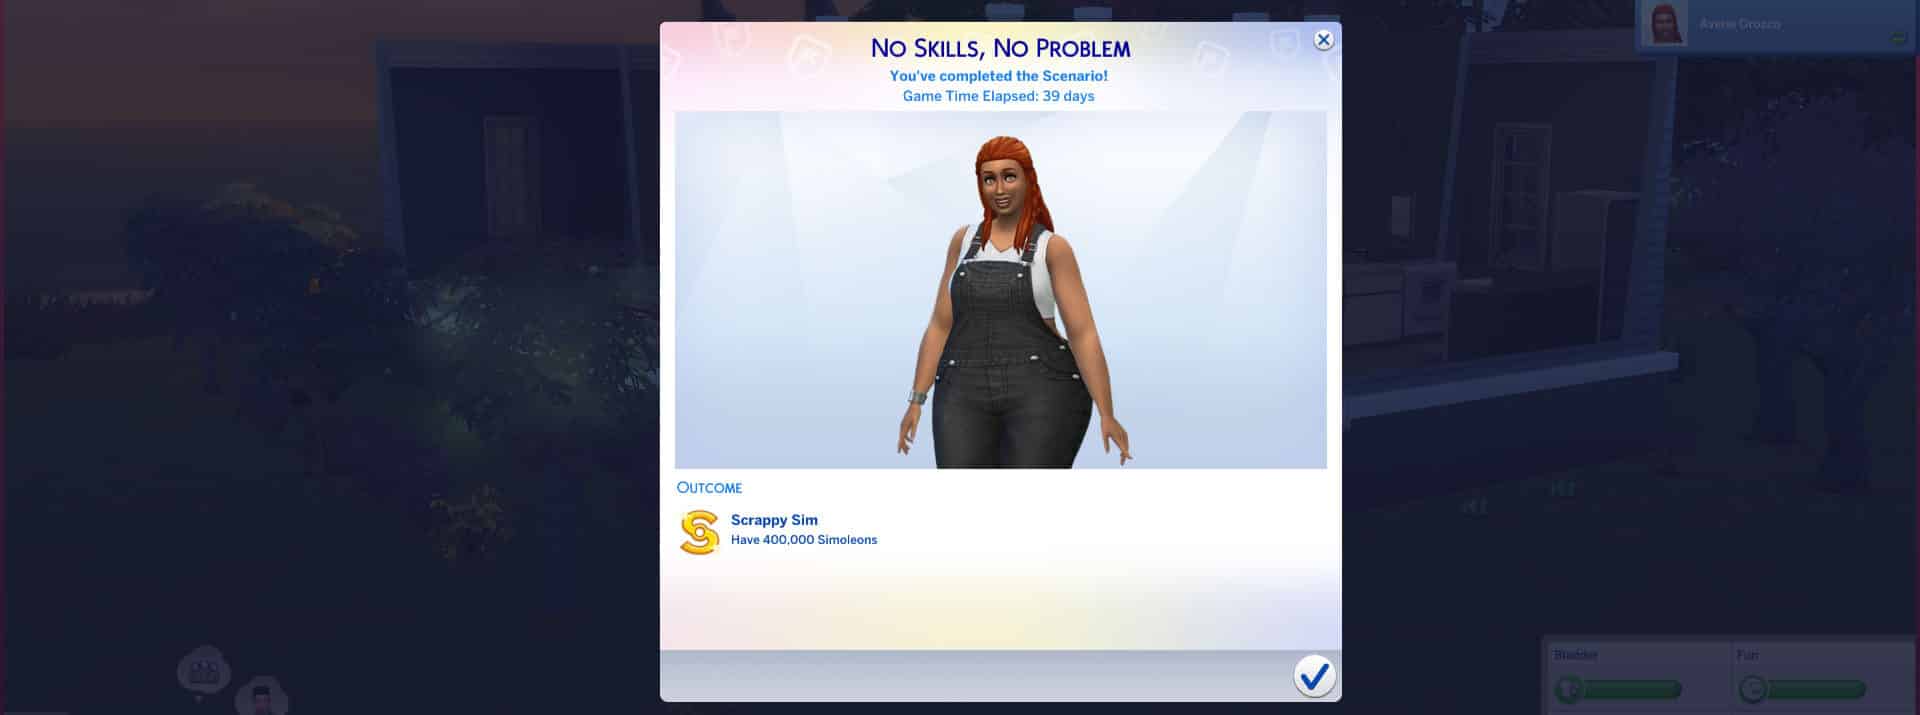 the sims 4 no skills no problem scenario completion pop up